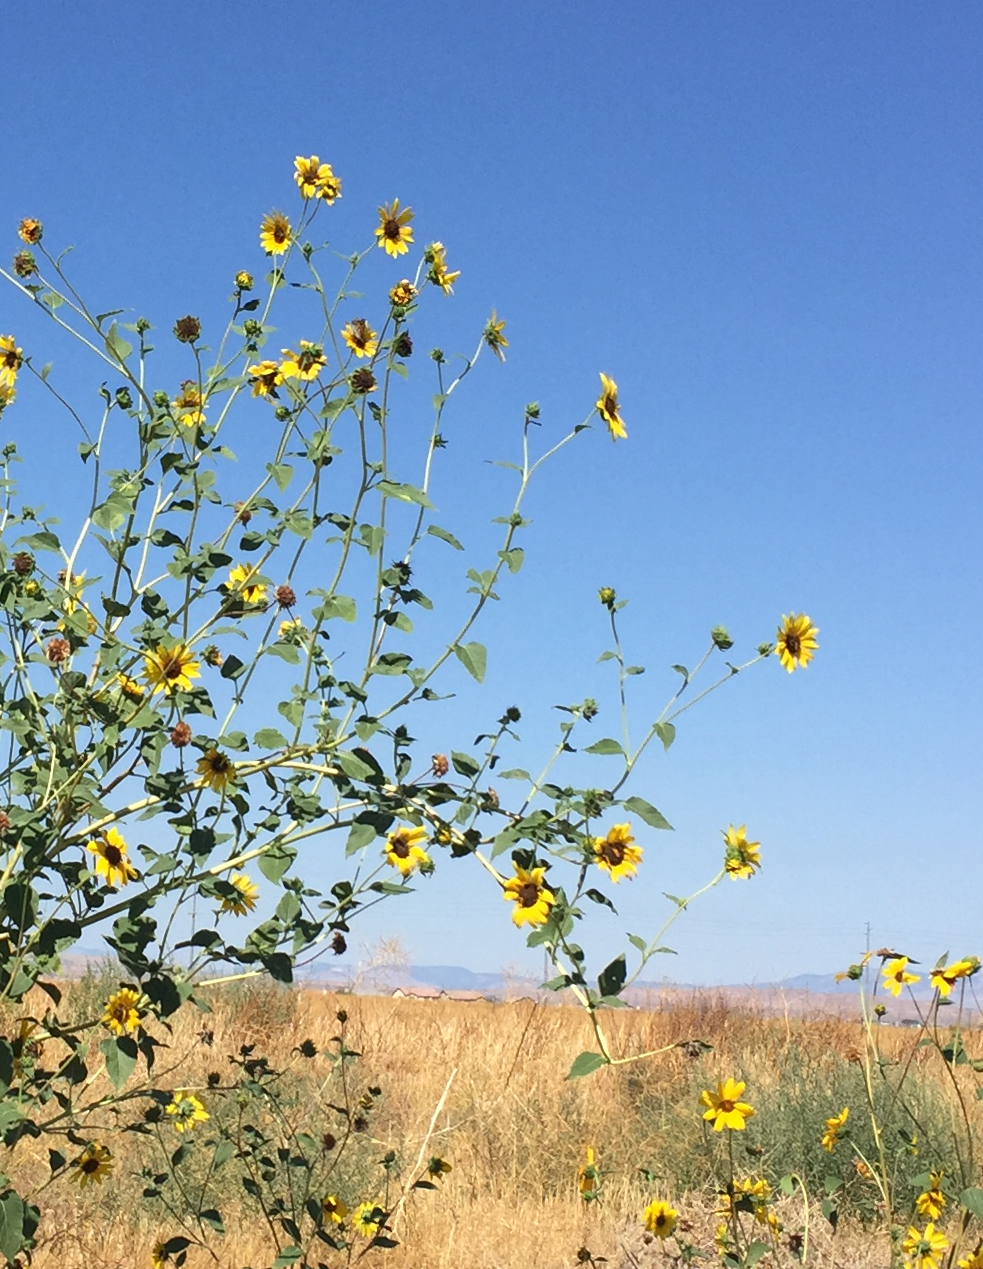 West Valley sunflowers